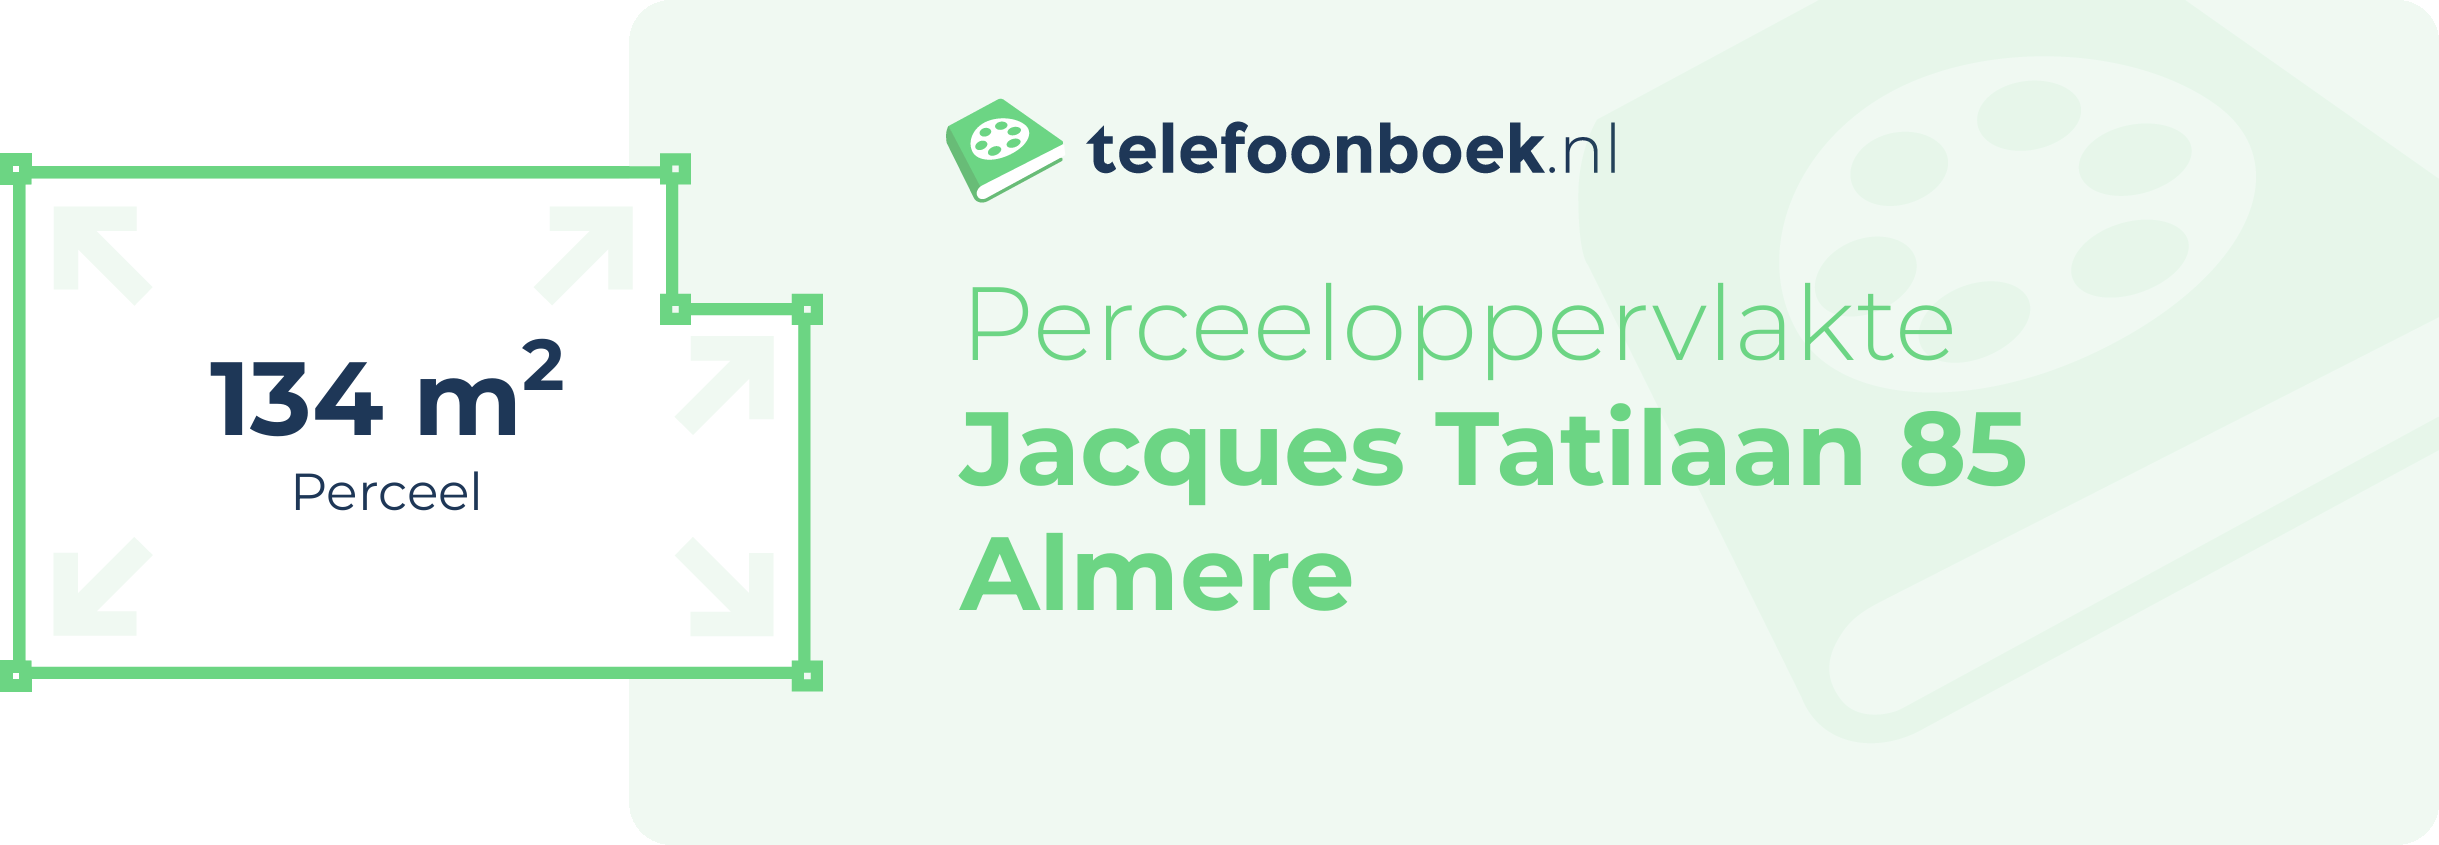 Perceeloppervlakte Jacques Tatilaan 85 Almere